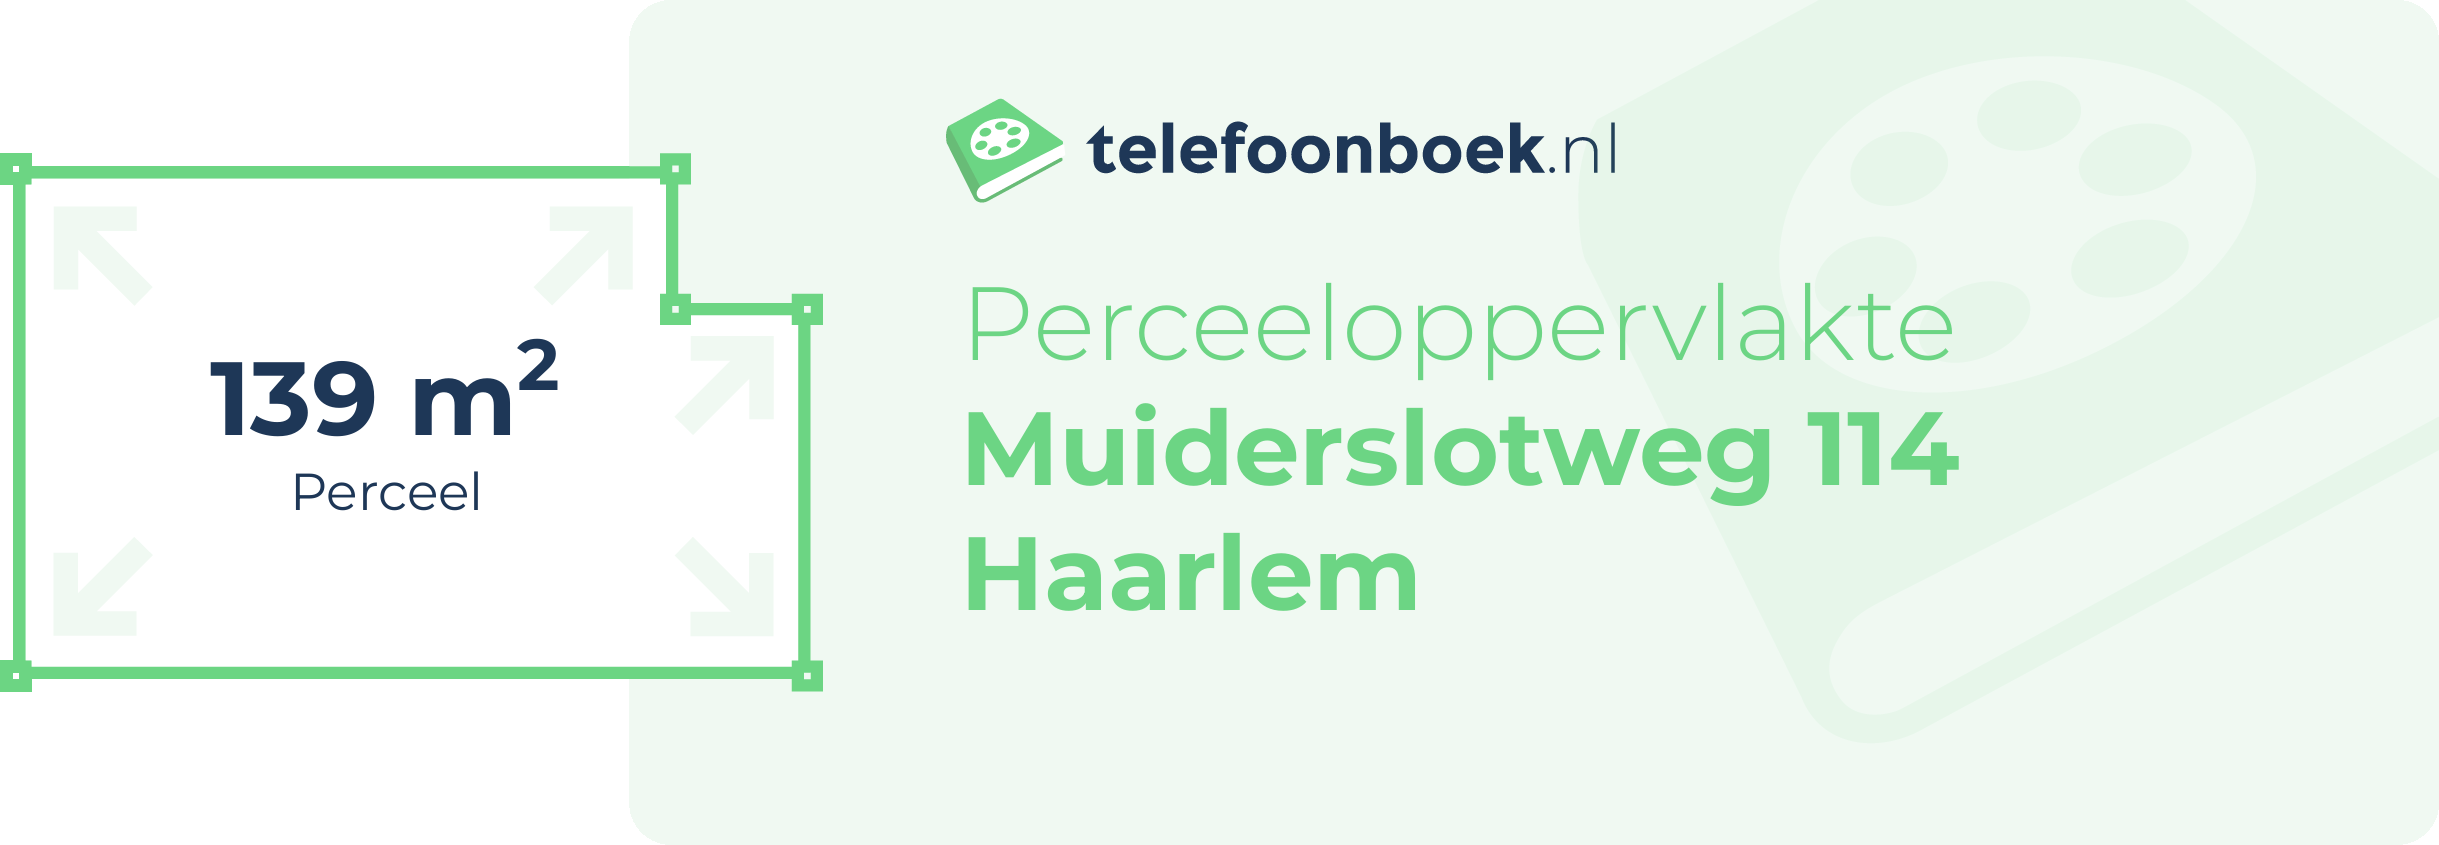 Perceeloppervlakte Muiderslotweg 114 Haarlem